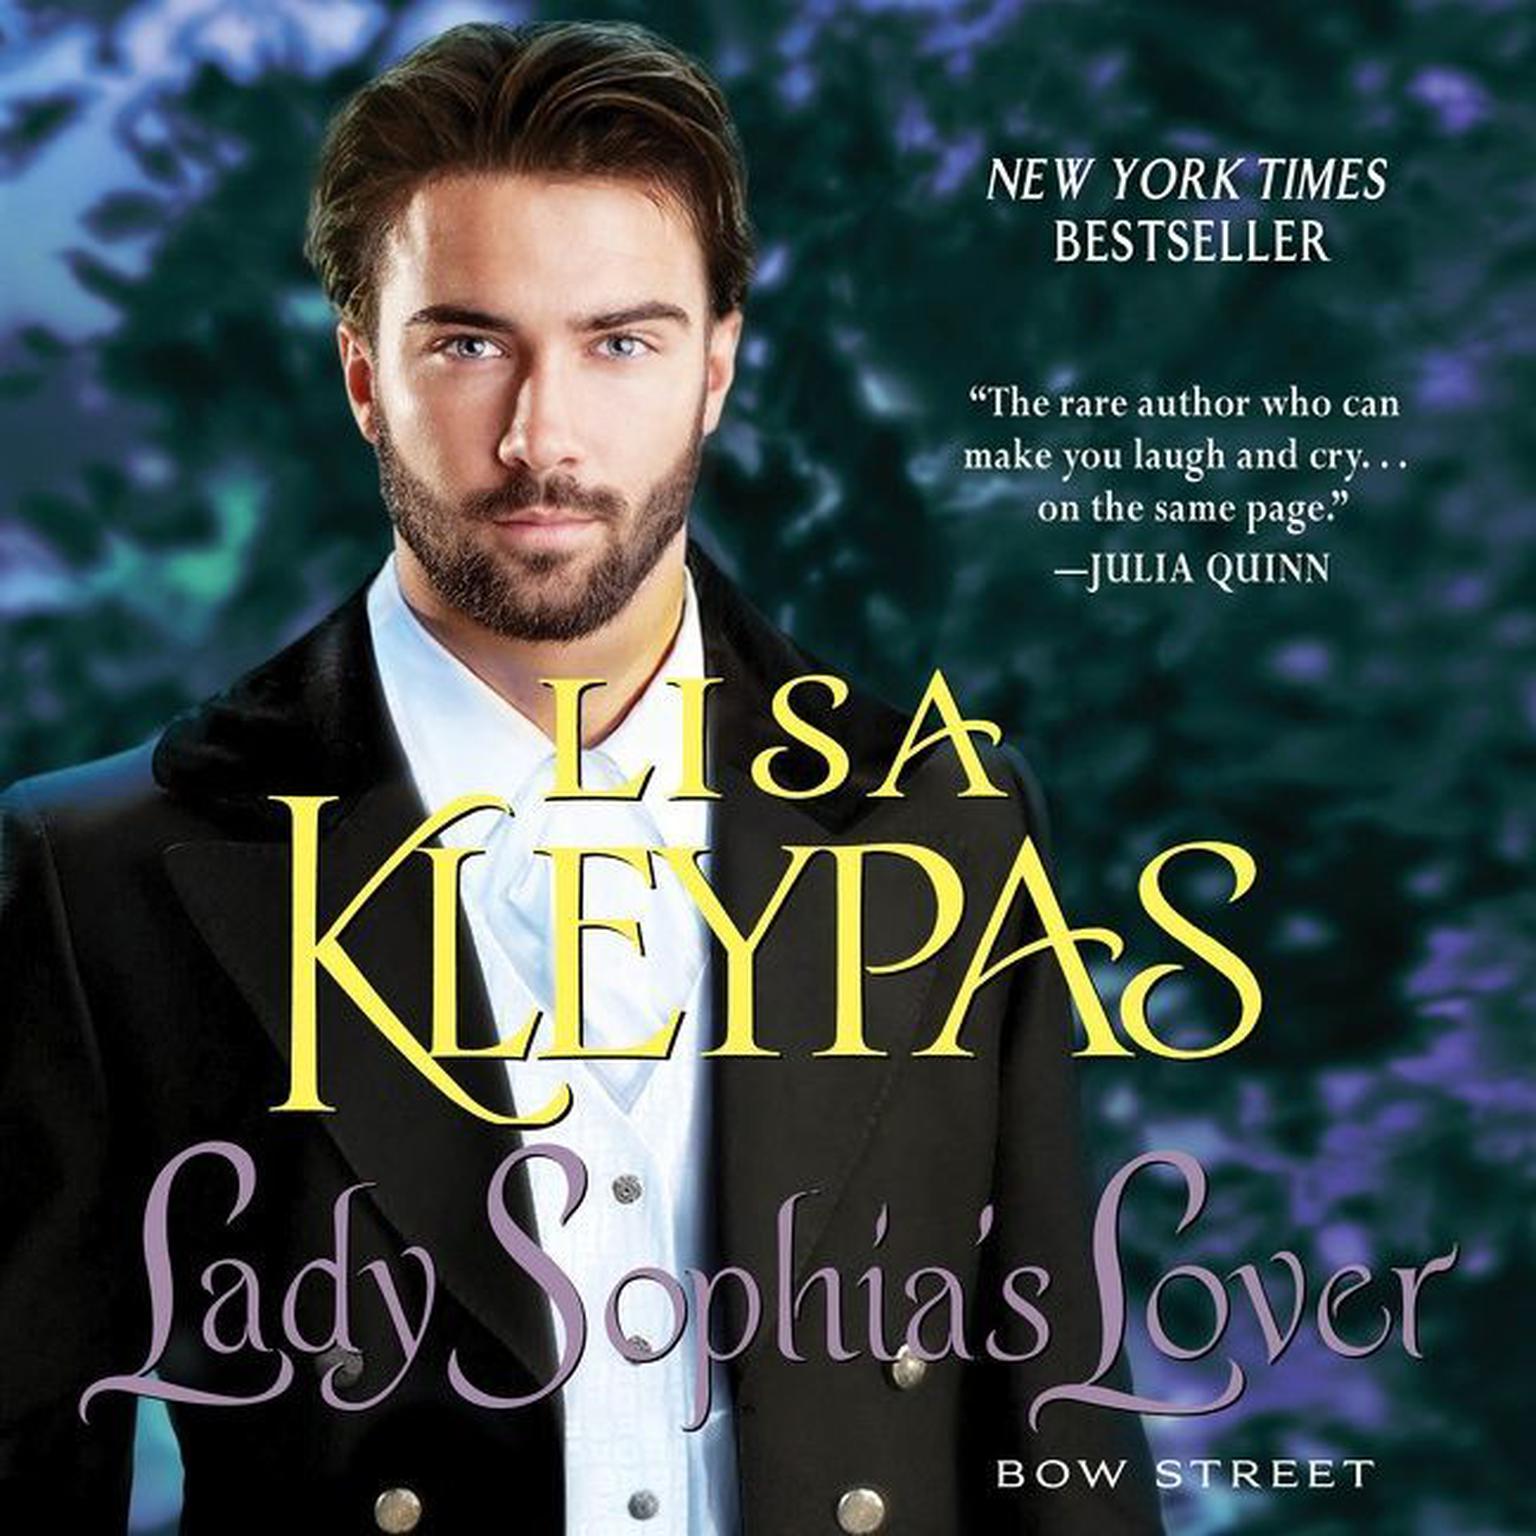 Lady Sophias Lover: A Novel Audiobook, by Lisa Kleypas